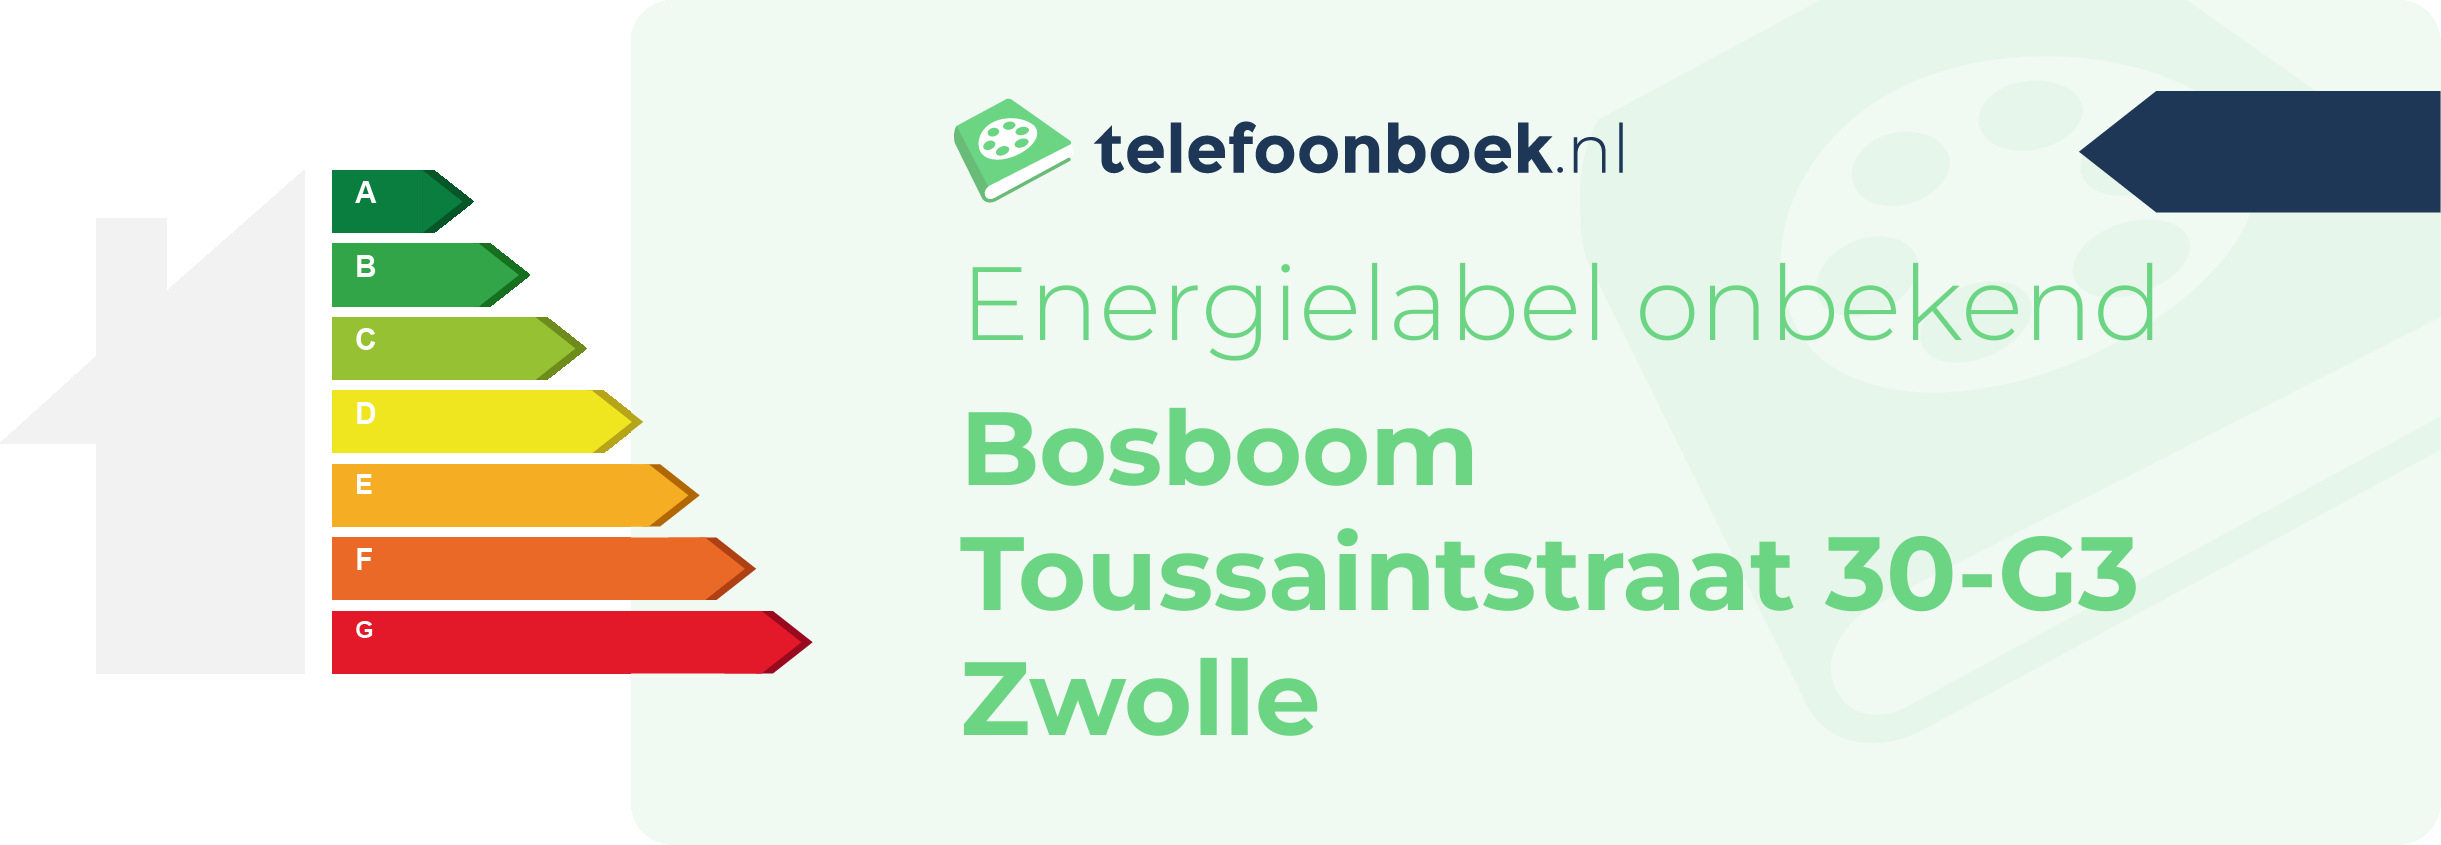 Energielabel Bosboom Toussaintstraat 30-G3 Zwolle